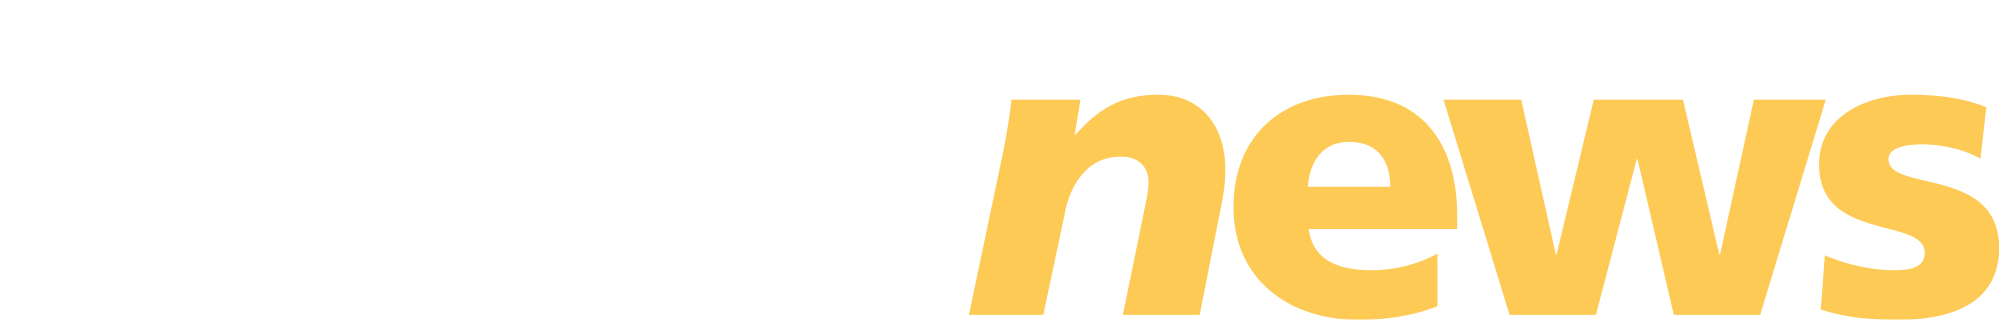 California School News logo